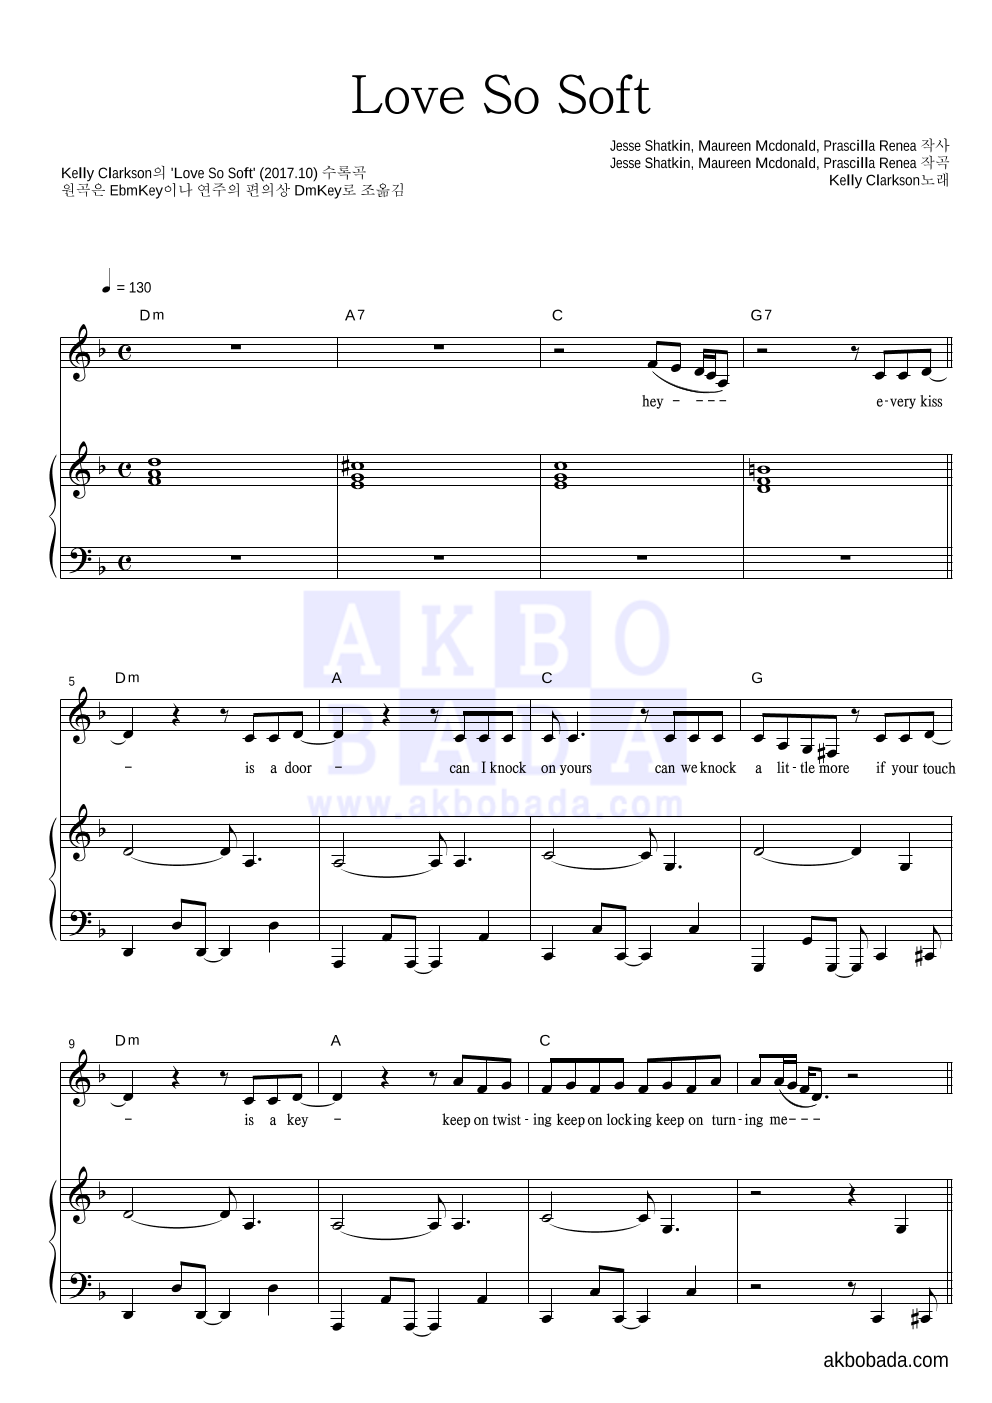 Kelly Clarkson - Love So Soft 피아노 3단 악보 